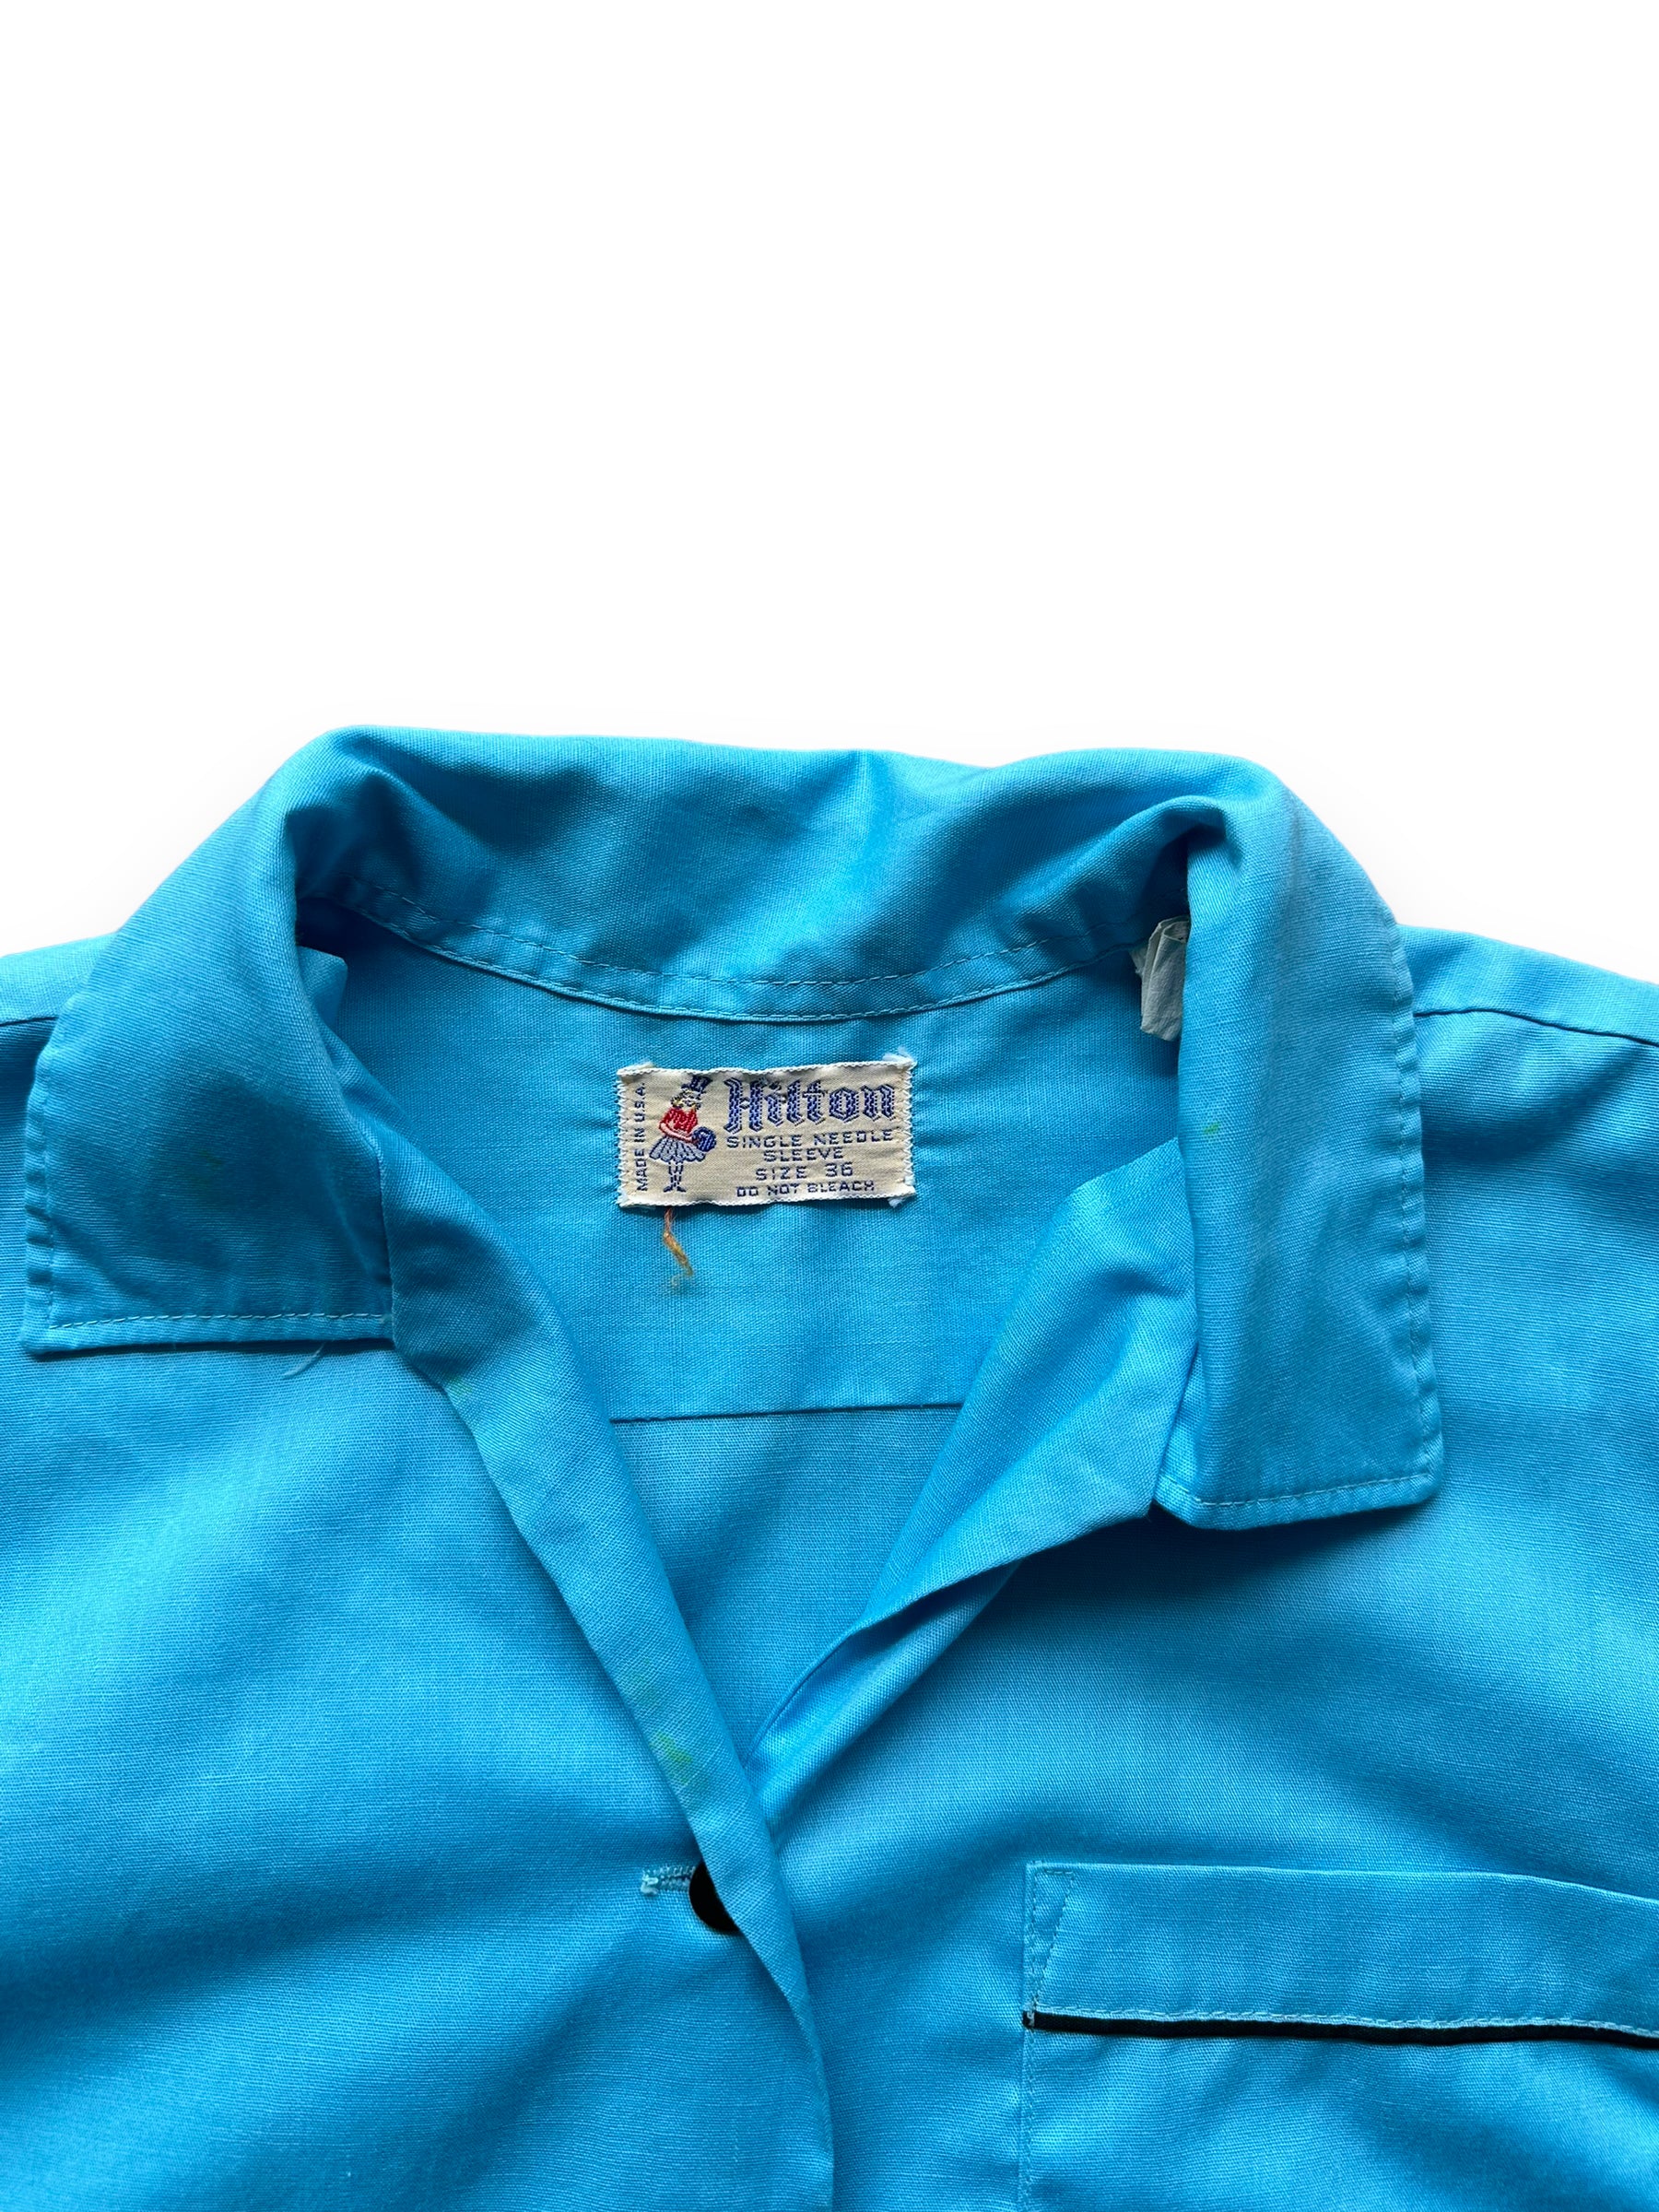 Collar close up of Vintage "Shoreline High" Chainstitched Bowling Shirt SZ 36 | Vintage Bowling Shirt Seattle | Barn Owl Vintage Seattle